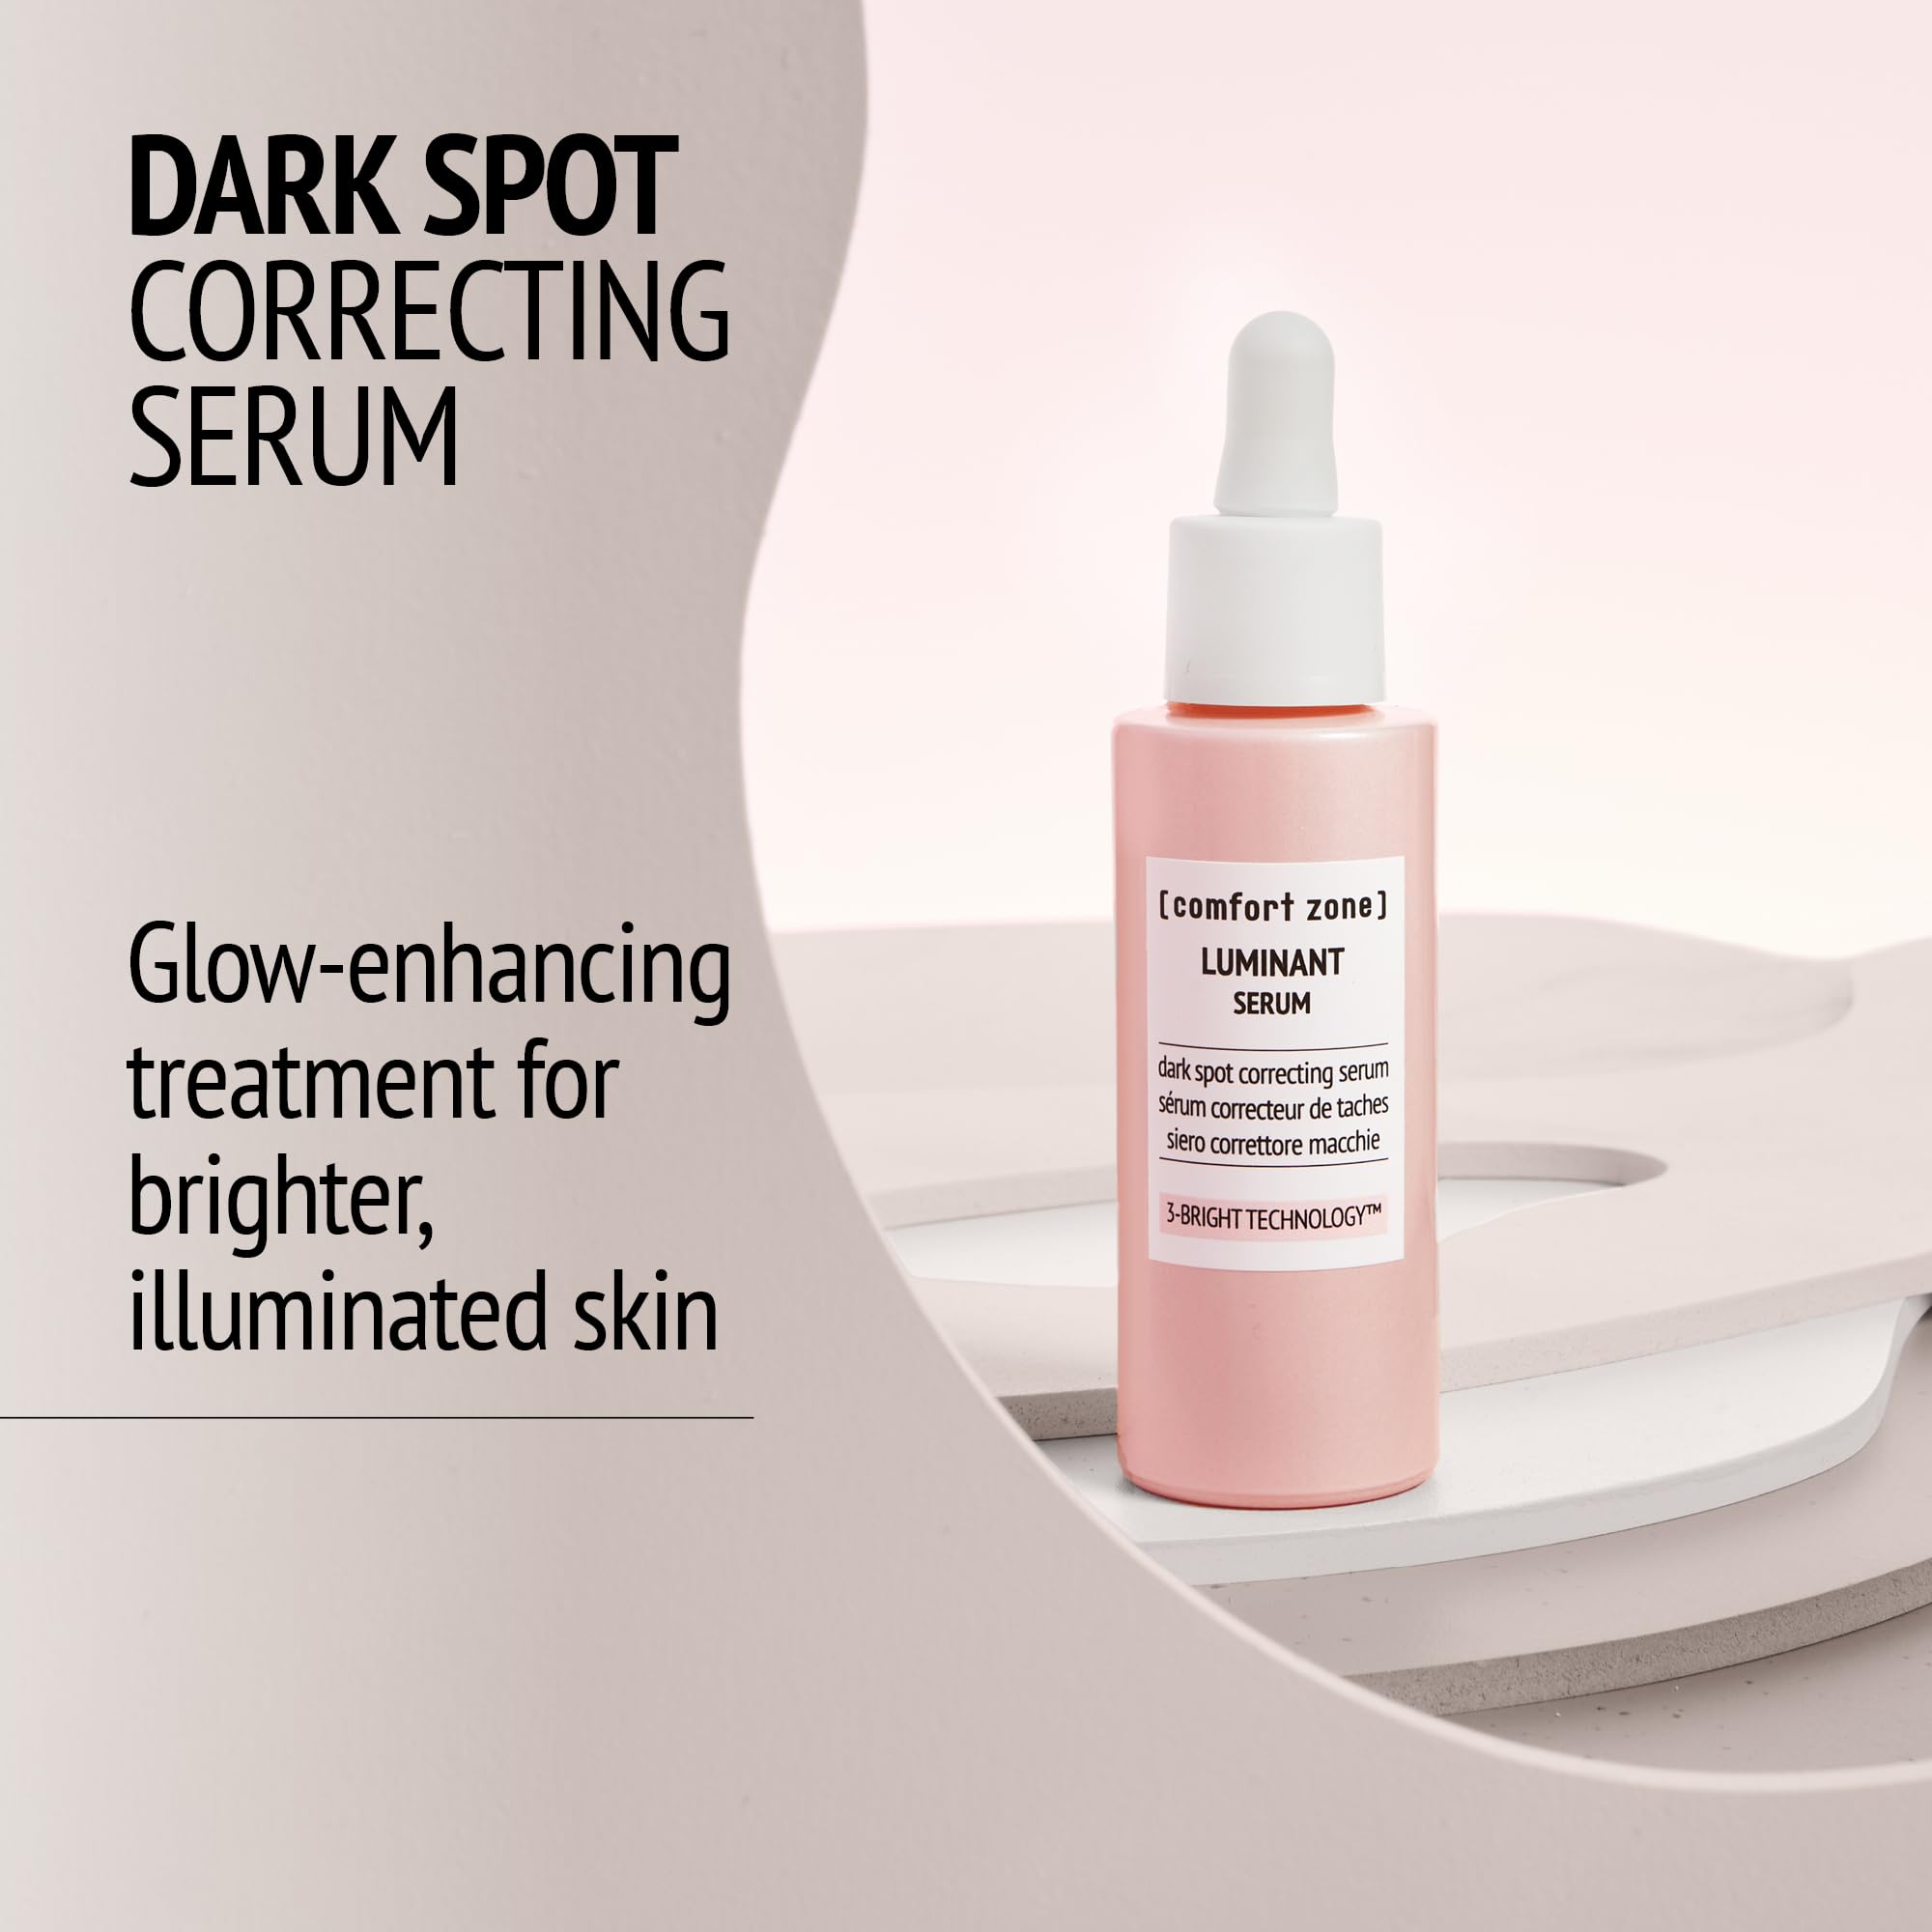 [comfort zone] Luminant Face Serum, Glow-Enhancing Dark Spot Correcting Serum to Brighten Skin, Vegan with Natural-Origin Ingredients, 3-Bright Technology, for all Skin Types & Tones, 1.01 Oz.